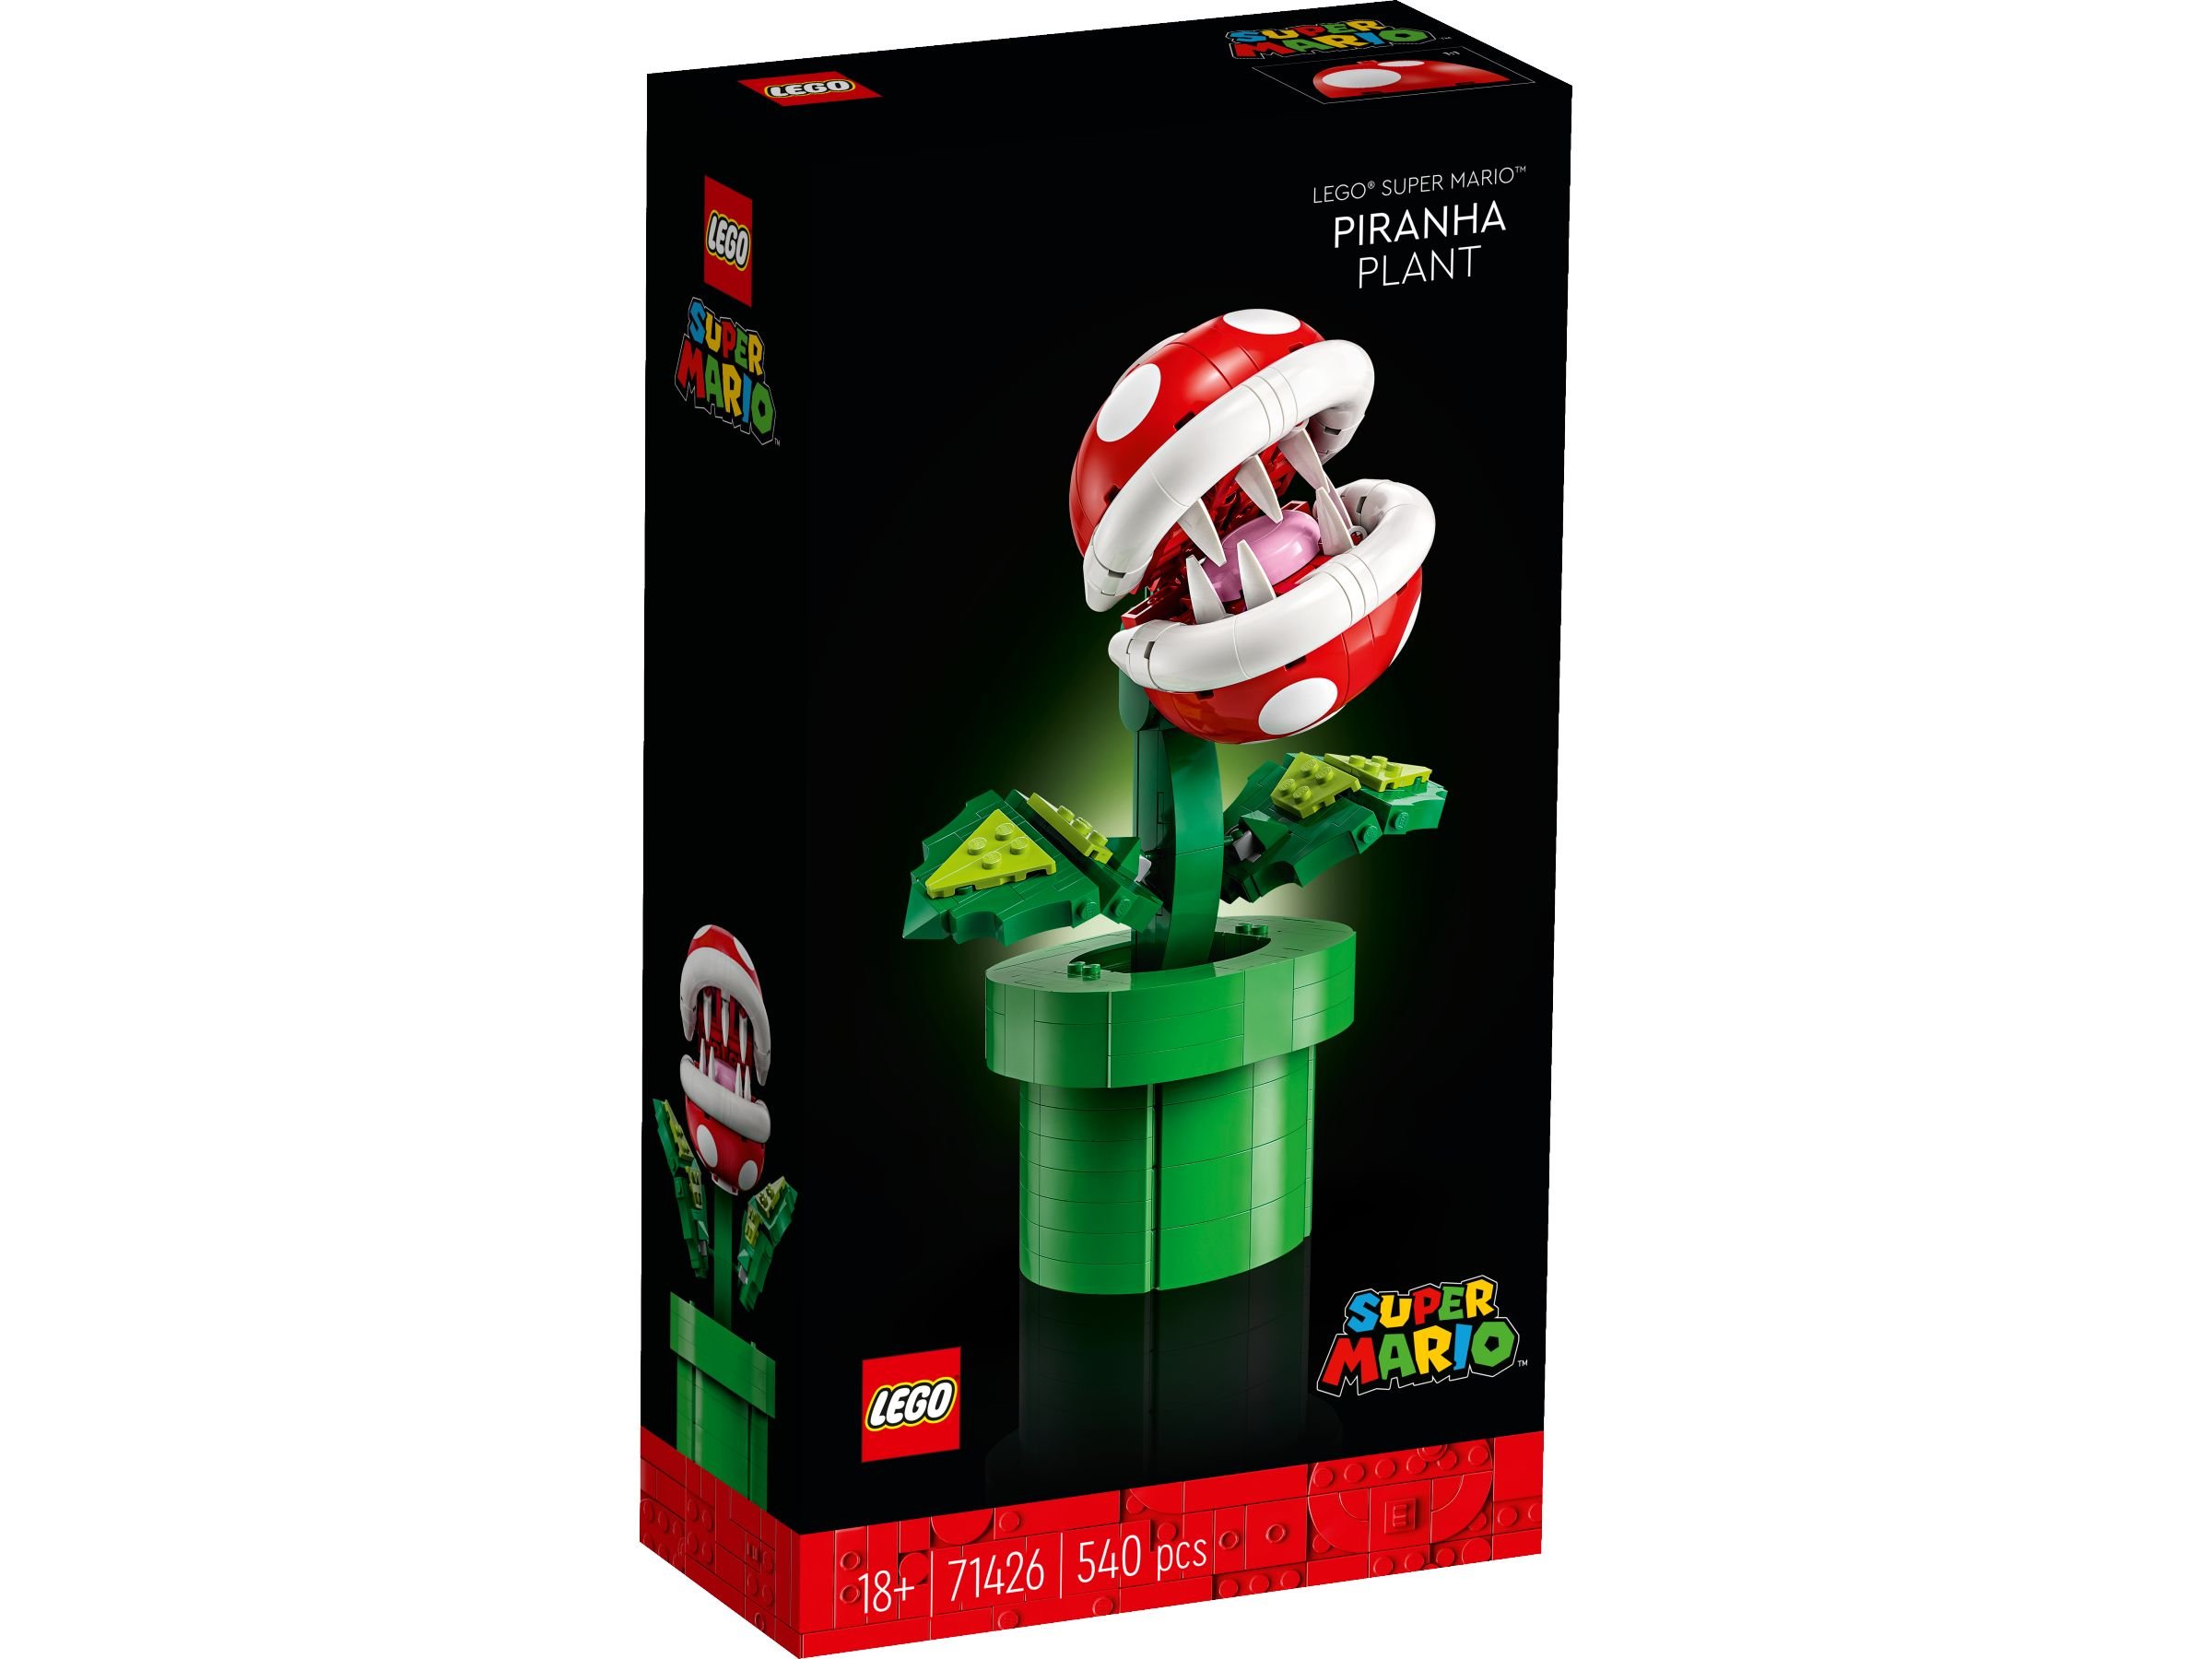 LEGO Super Mario 71426 Piranha-Pflanze LEGO_71426_Box1_v29.jpg